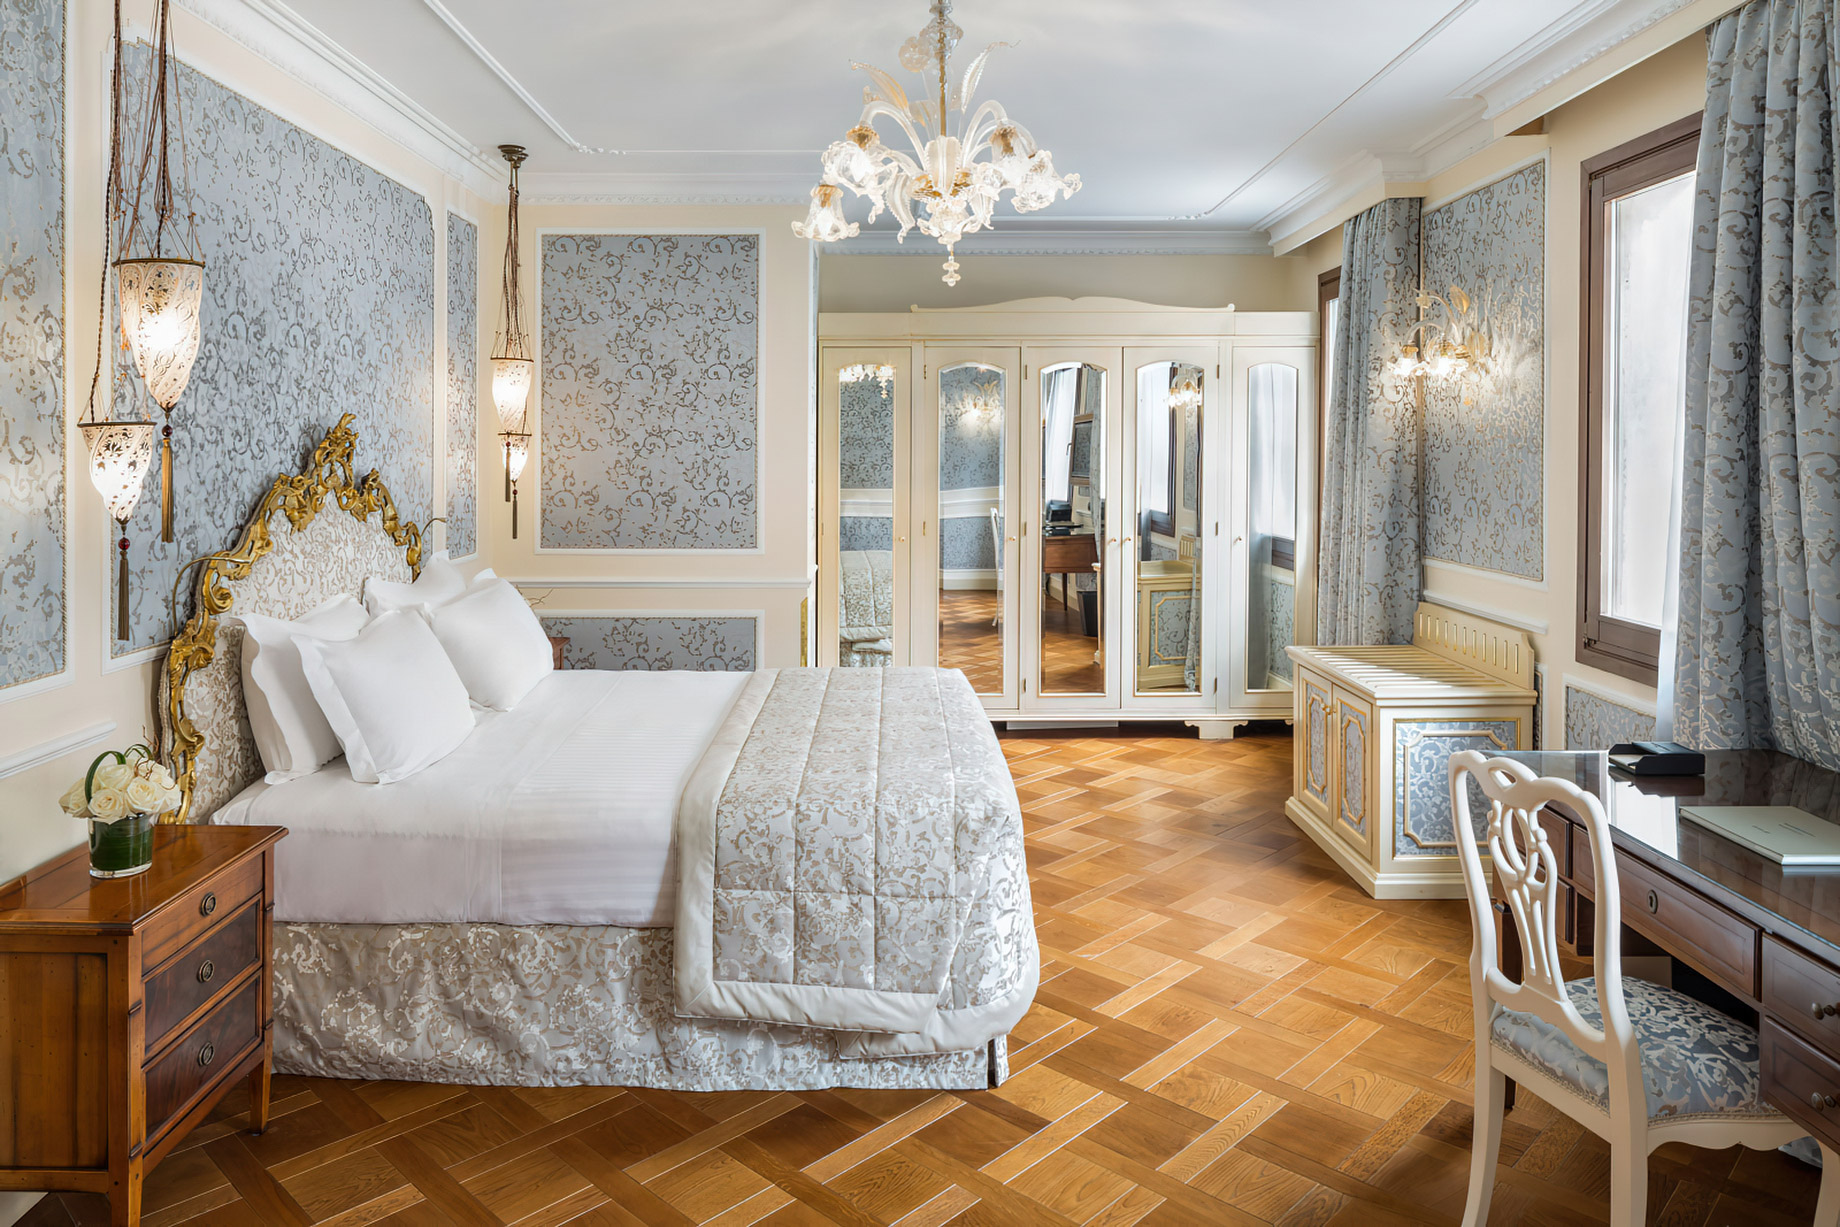 Baglioni Hotel Luna, Venezia – Venice, Italy – 2 Bedroom Family Junior Suite Interior